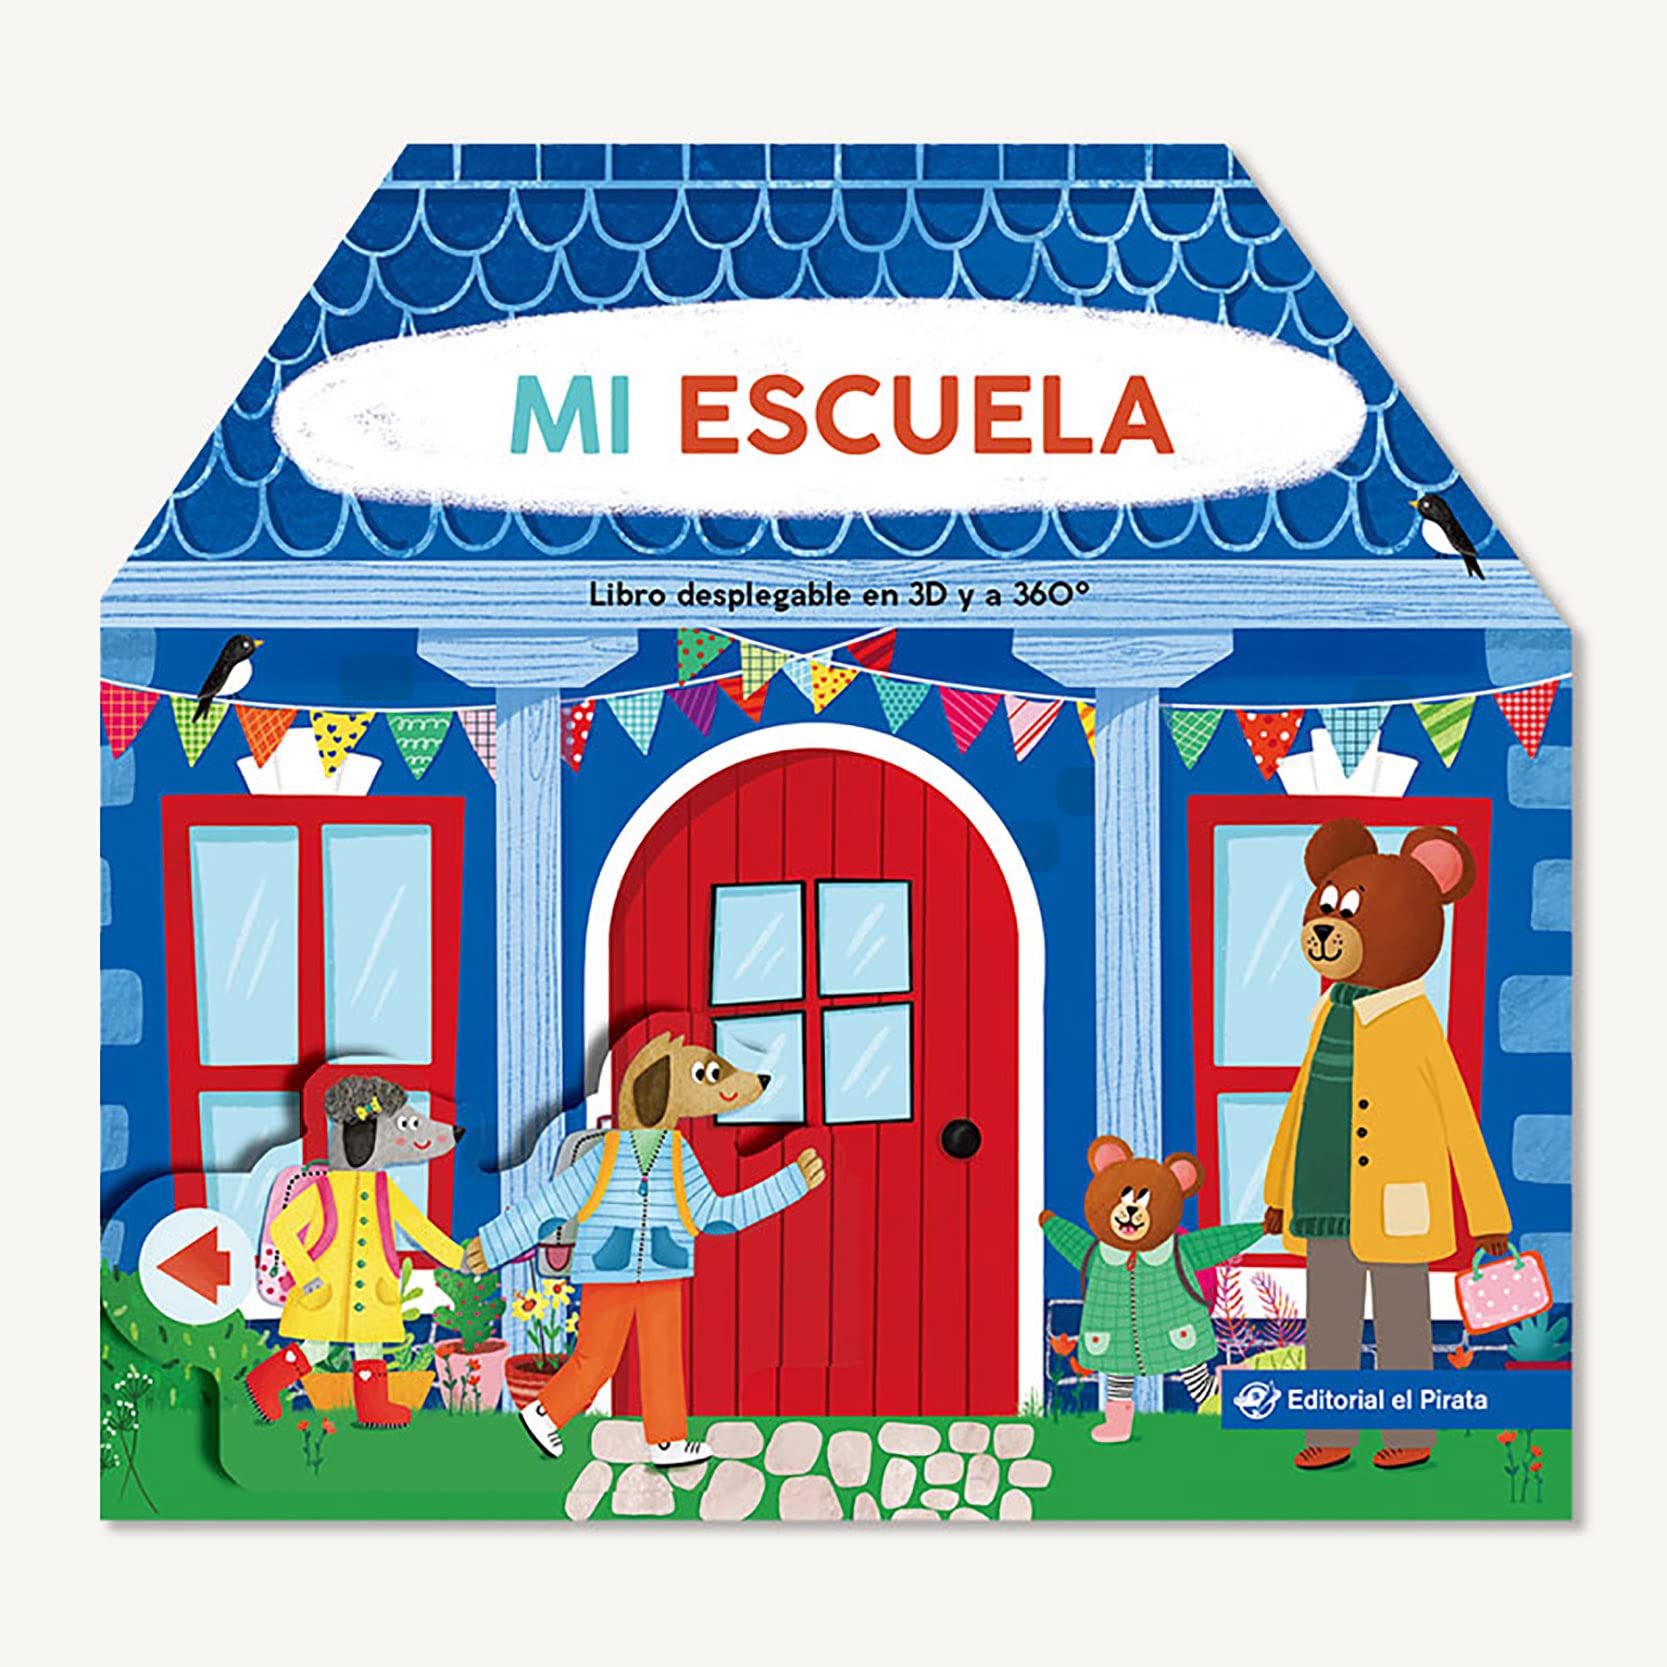 Mi escuela: Libro carrusel desplegable en 3D y a 360º - 3D Carousel unfoldable book in Spanish